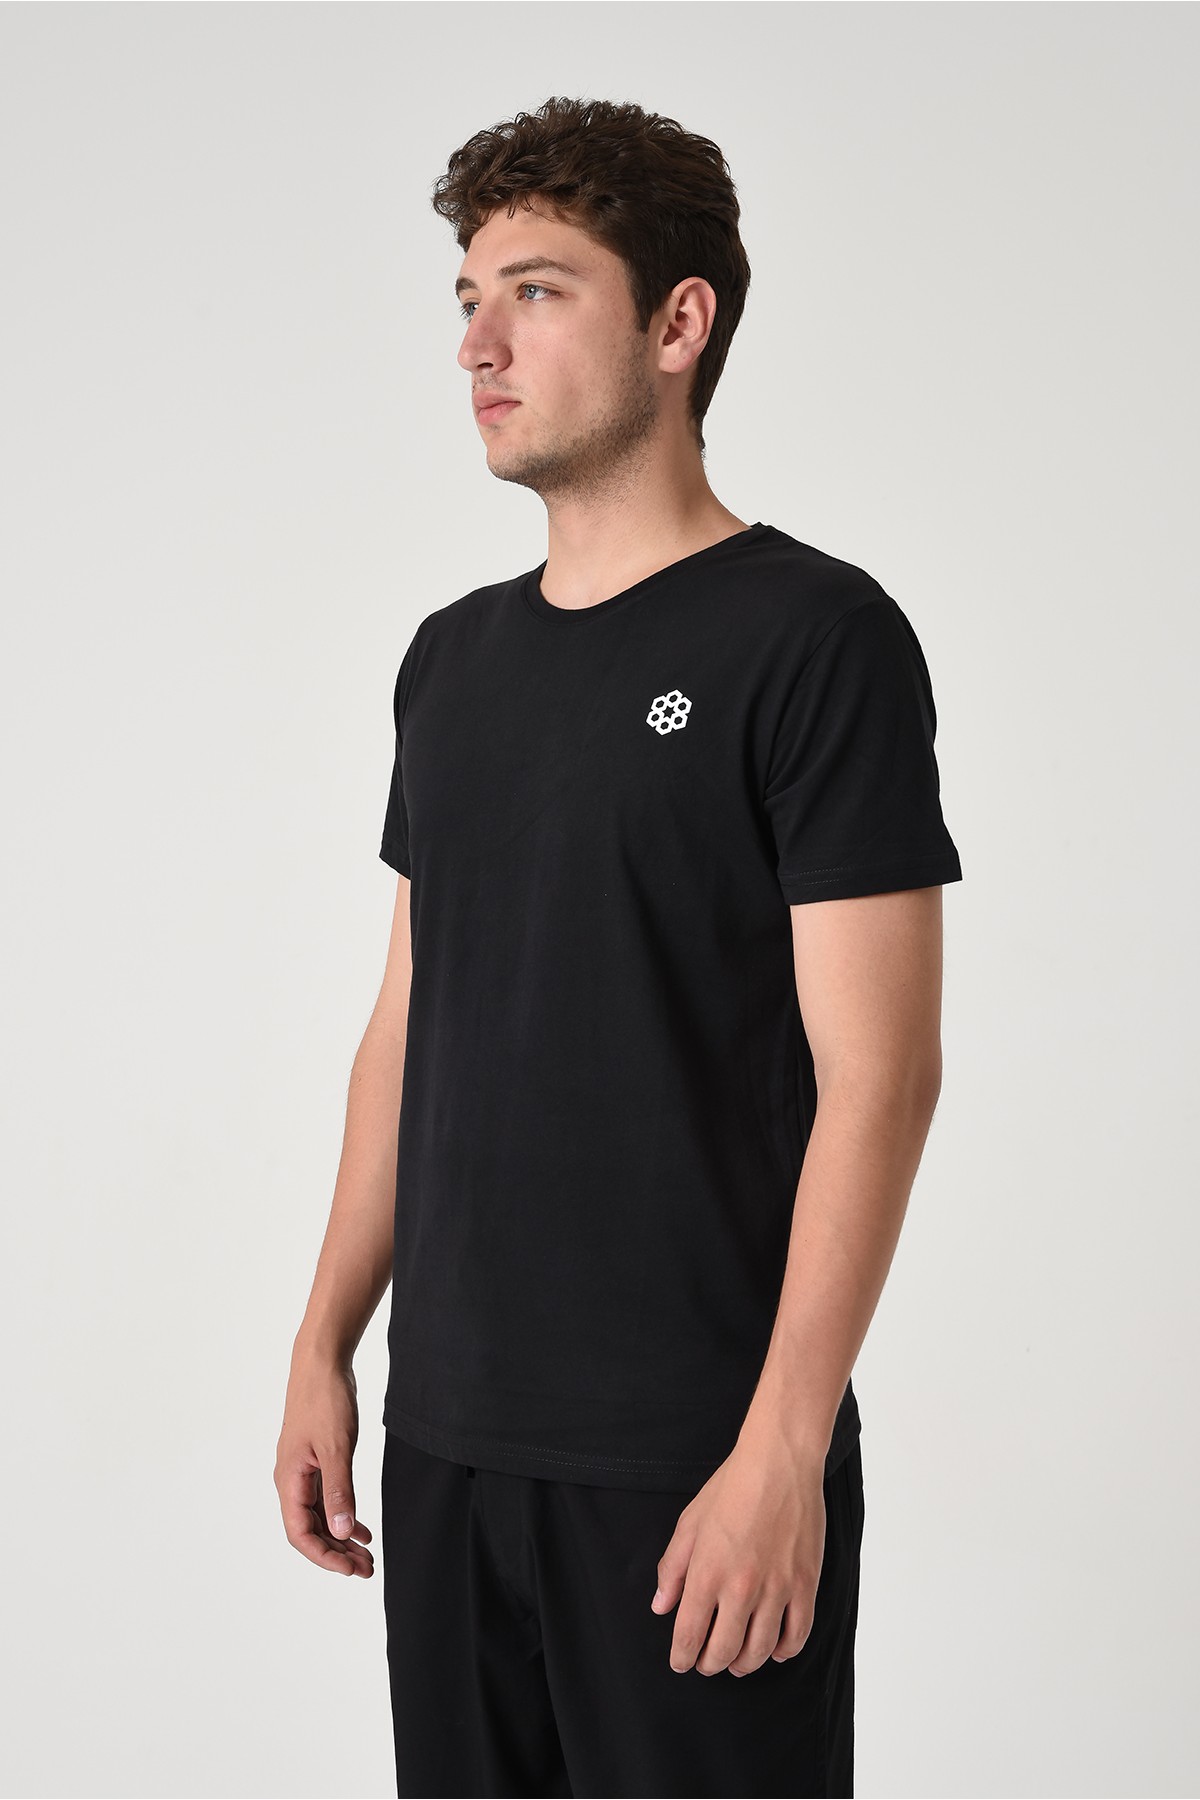 Dembu Tasarım Pamuk Baskılı Siyah T-shirt